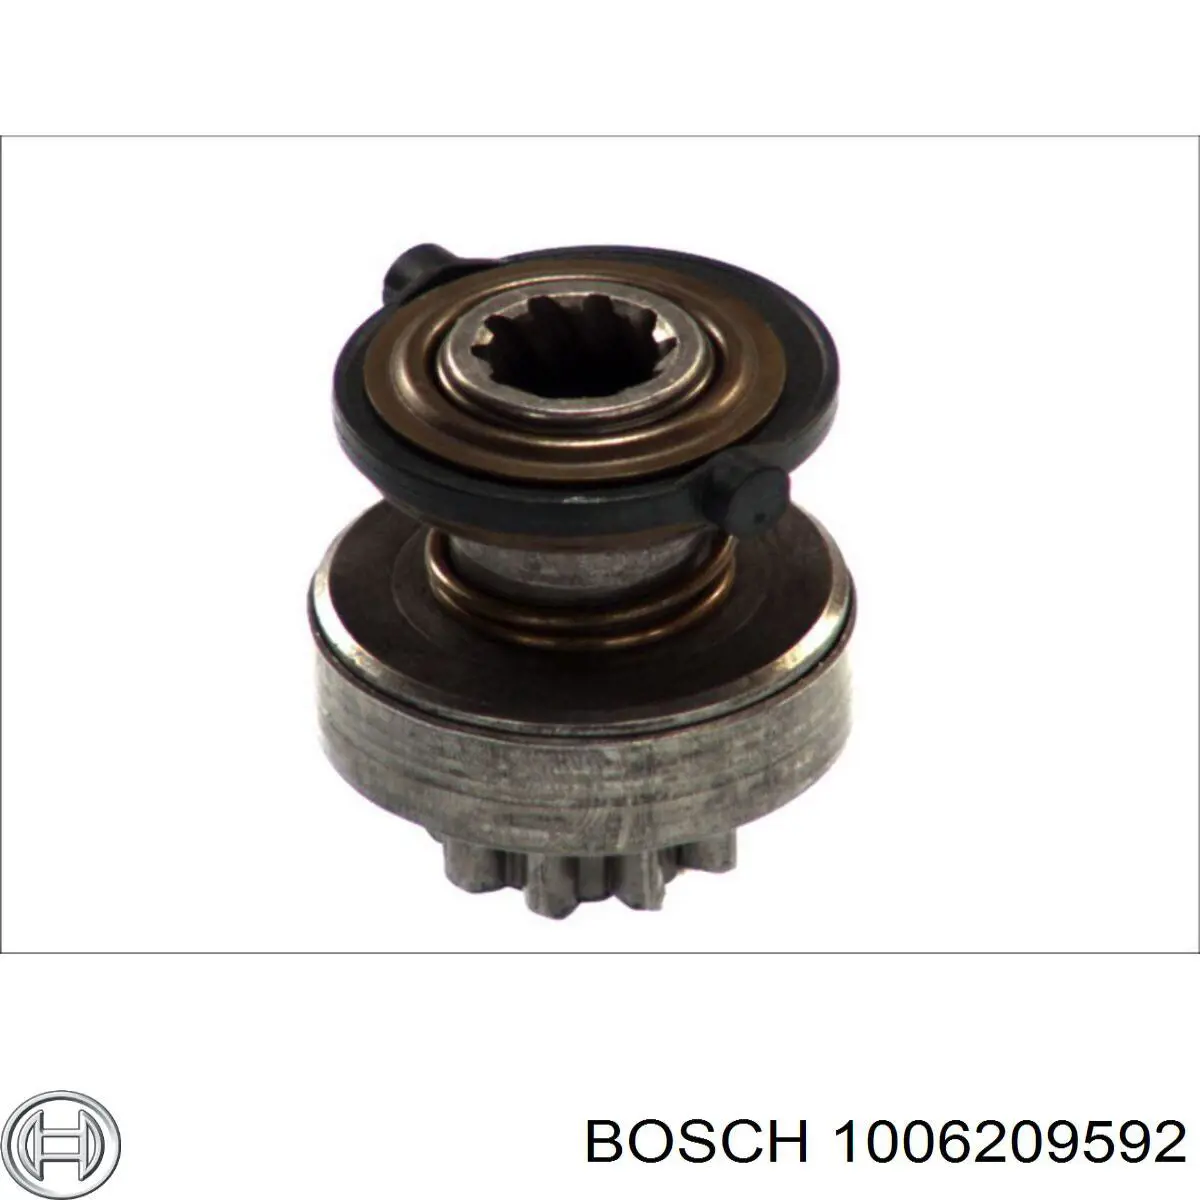 1006209592 Bosch bendix, motor de arranque